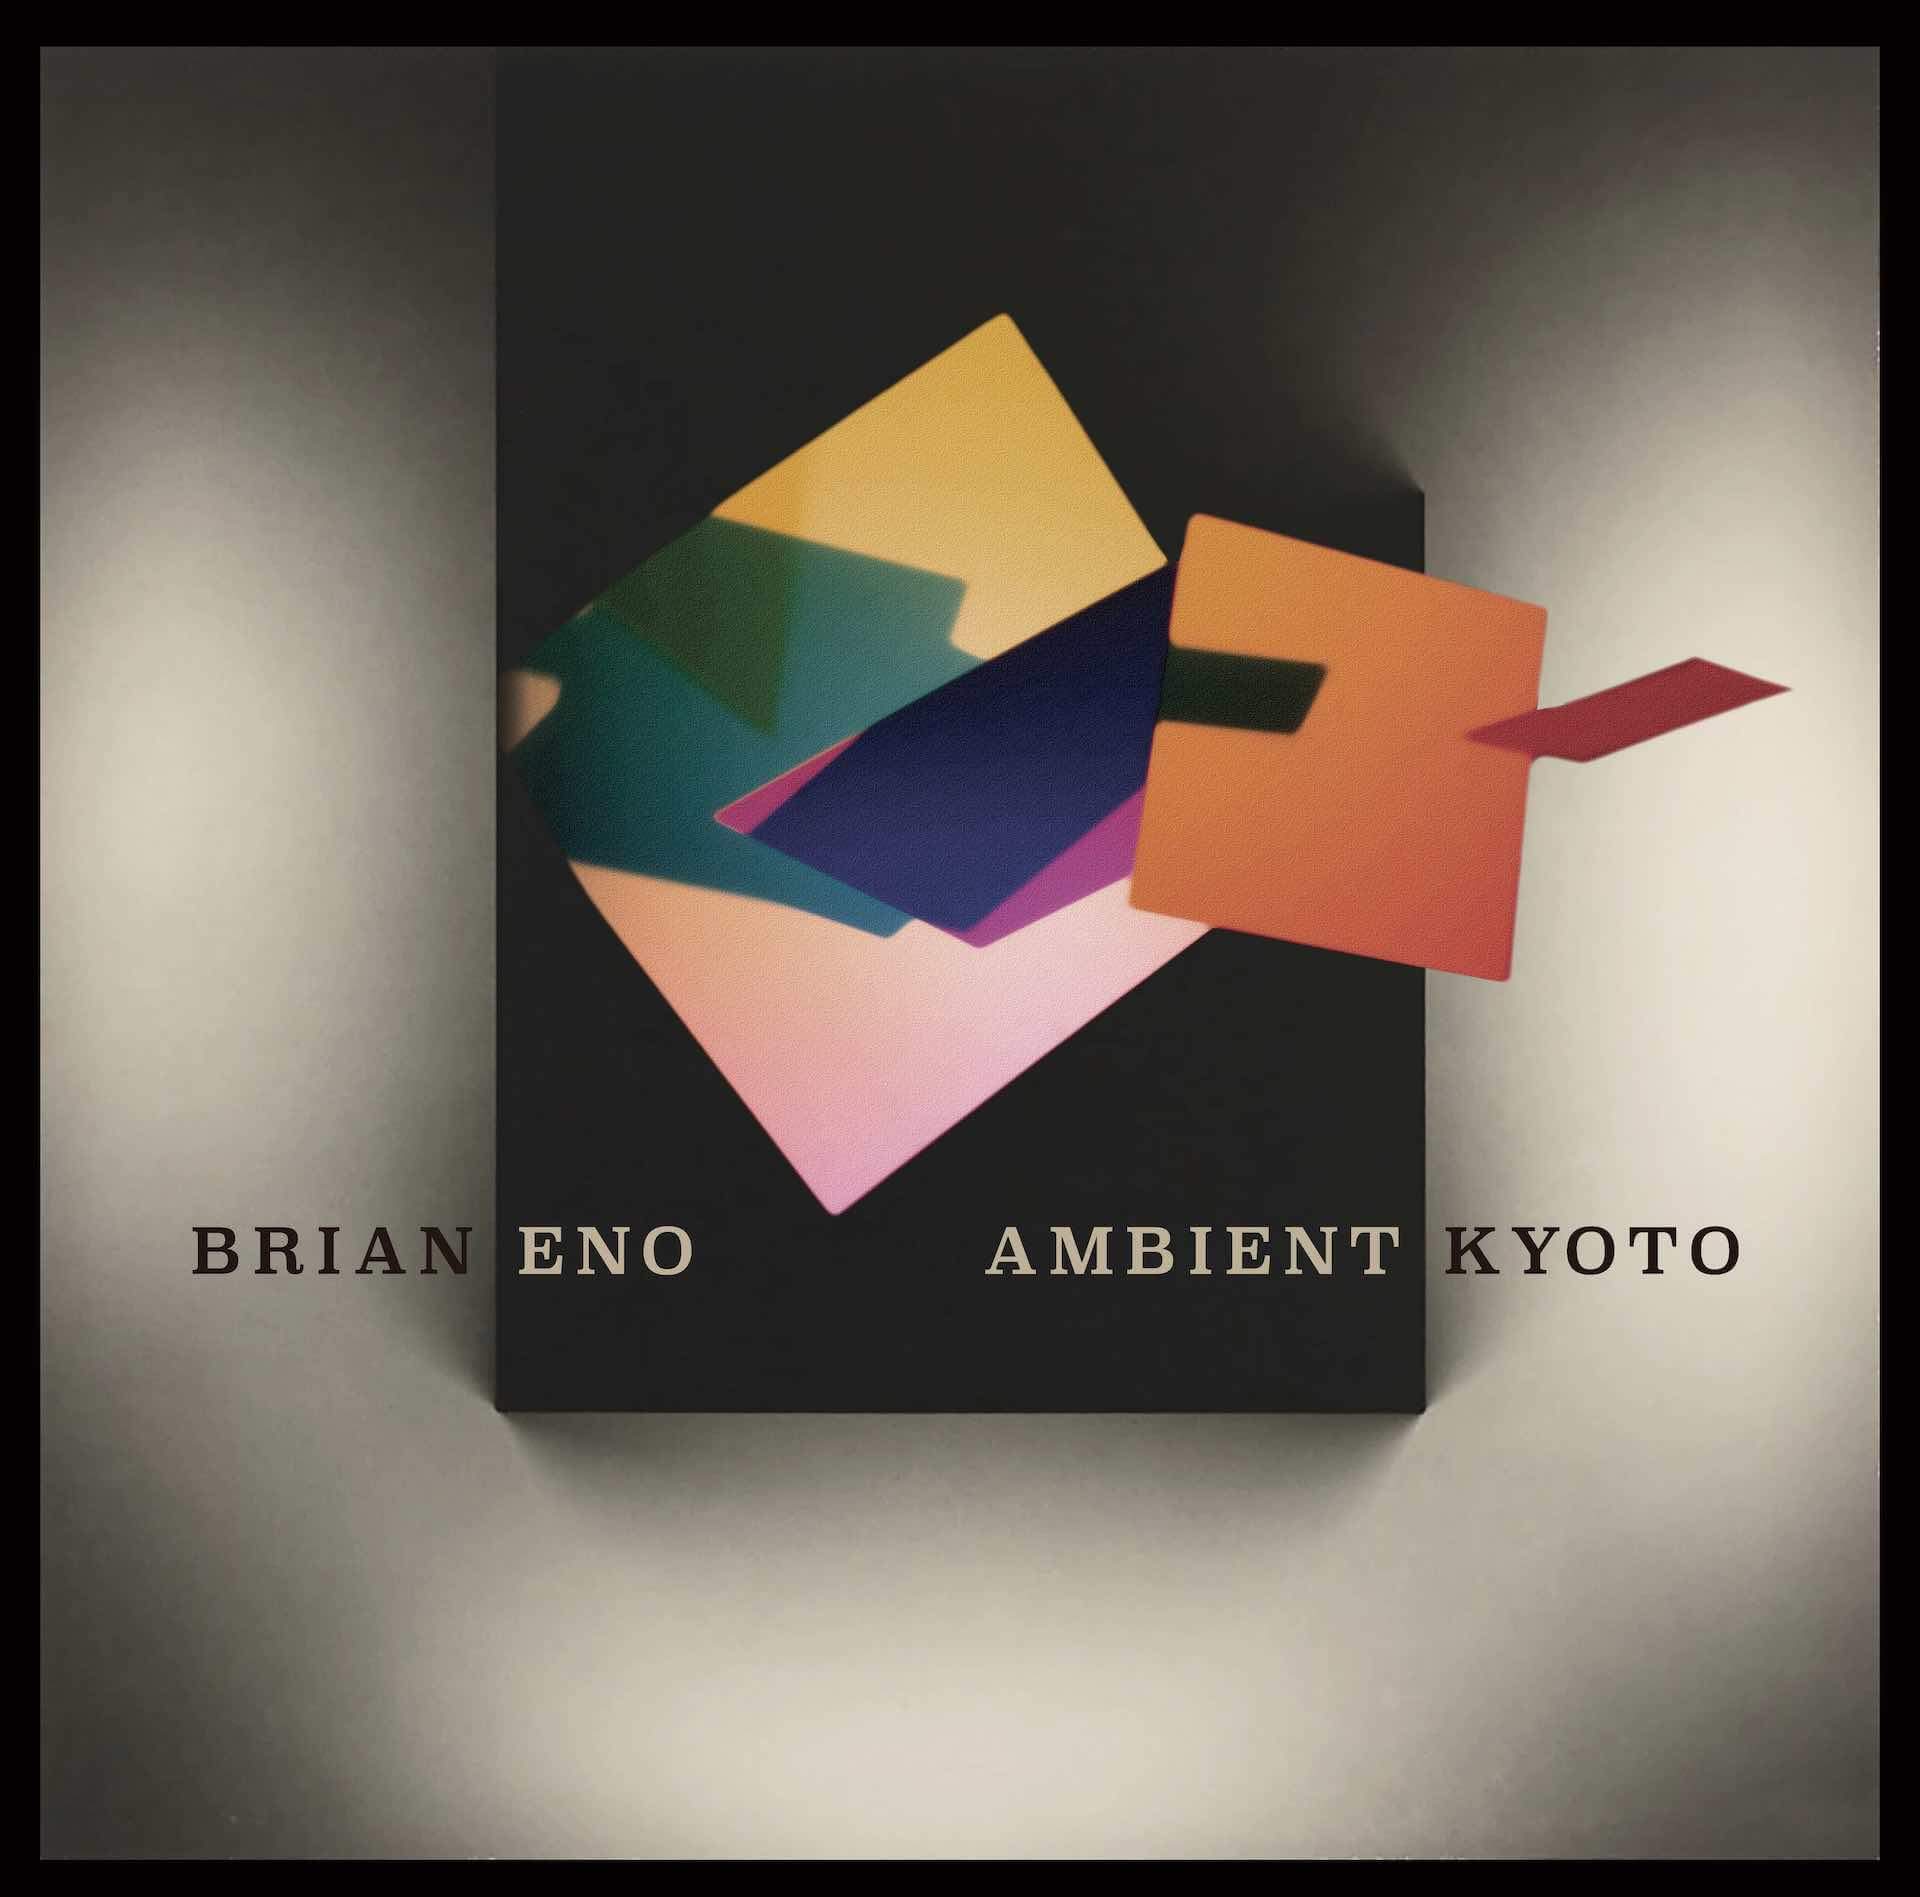 『BRIAN ENO AMBIENT KYOTO』世界初公開作含む全作品のラインナップを発表＆横尾忠則からのコメントが到着 art-culture220511-ambientkyoto-4